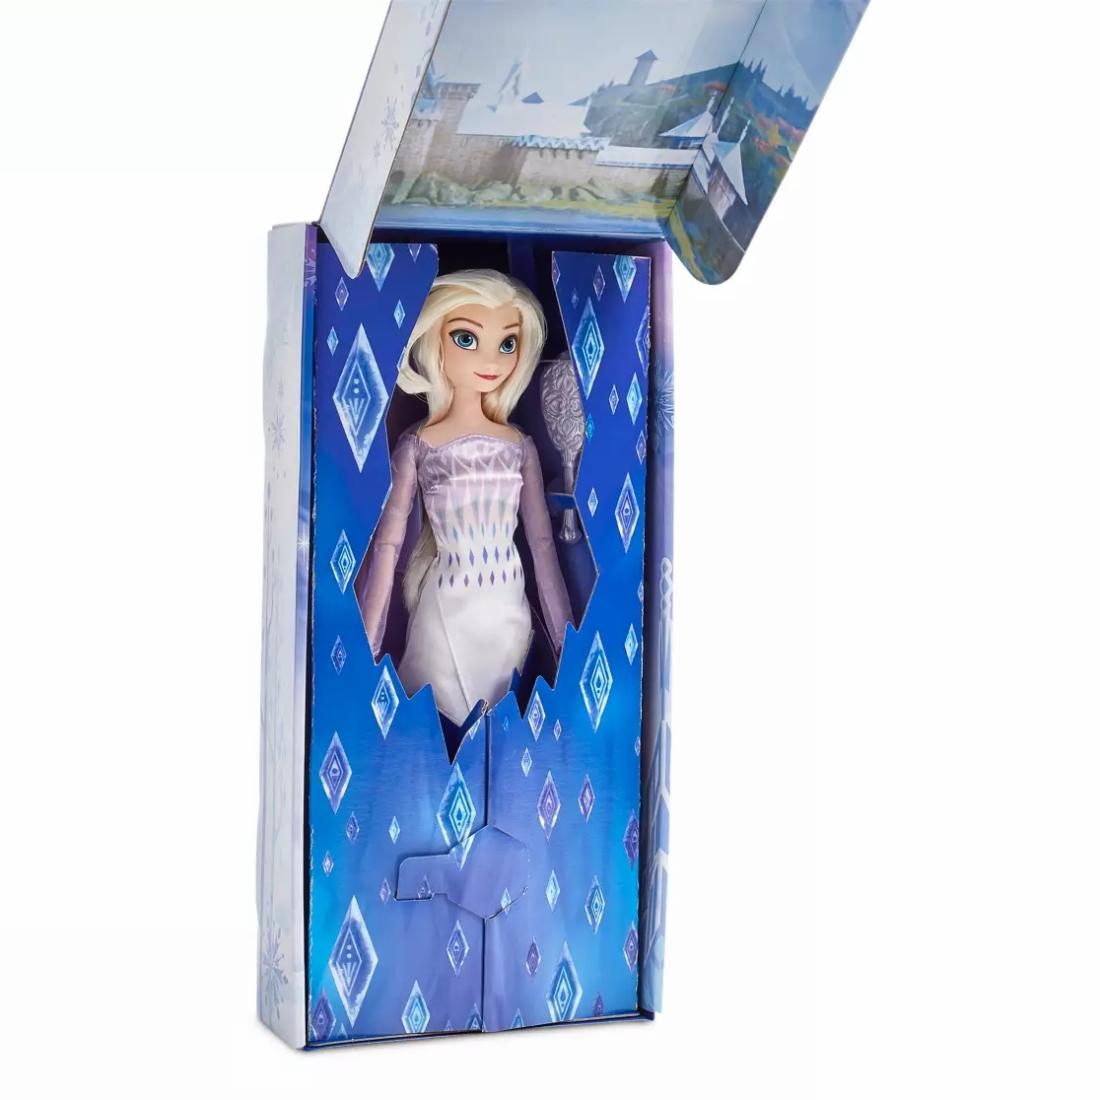 Elsa Classic Doll – Frozen